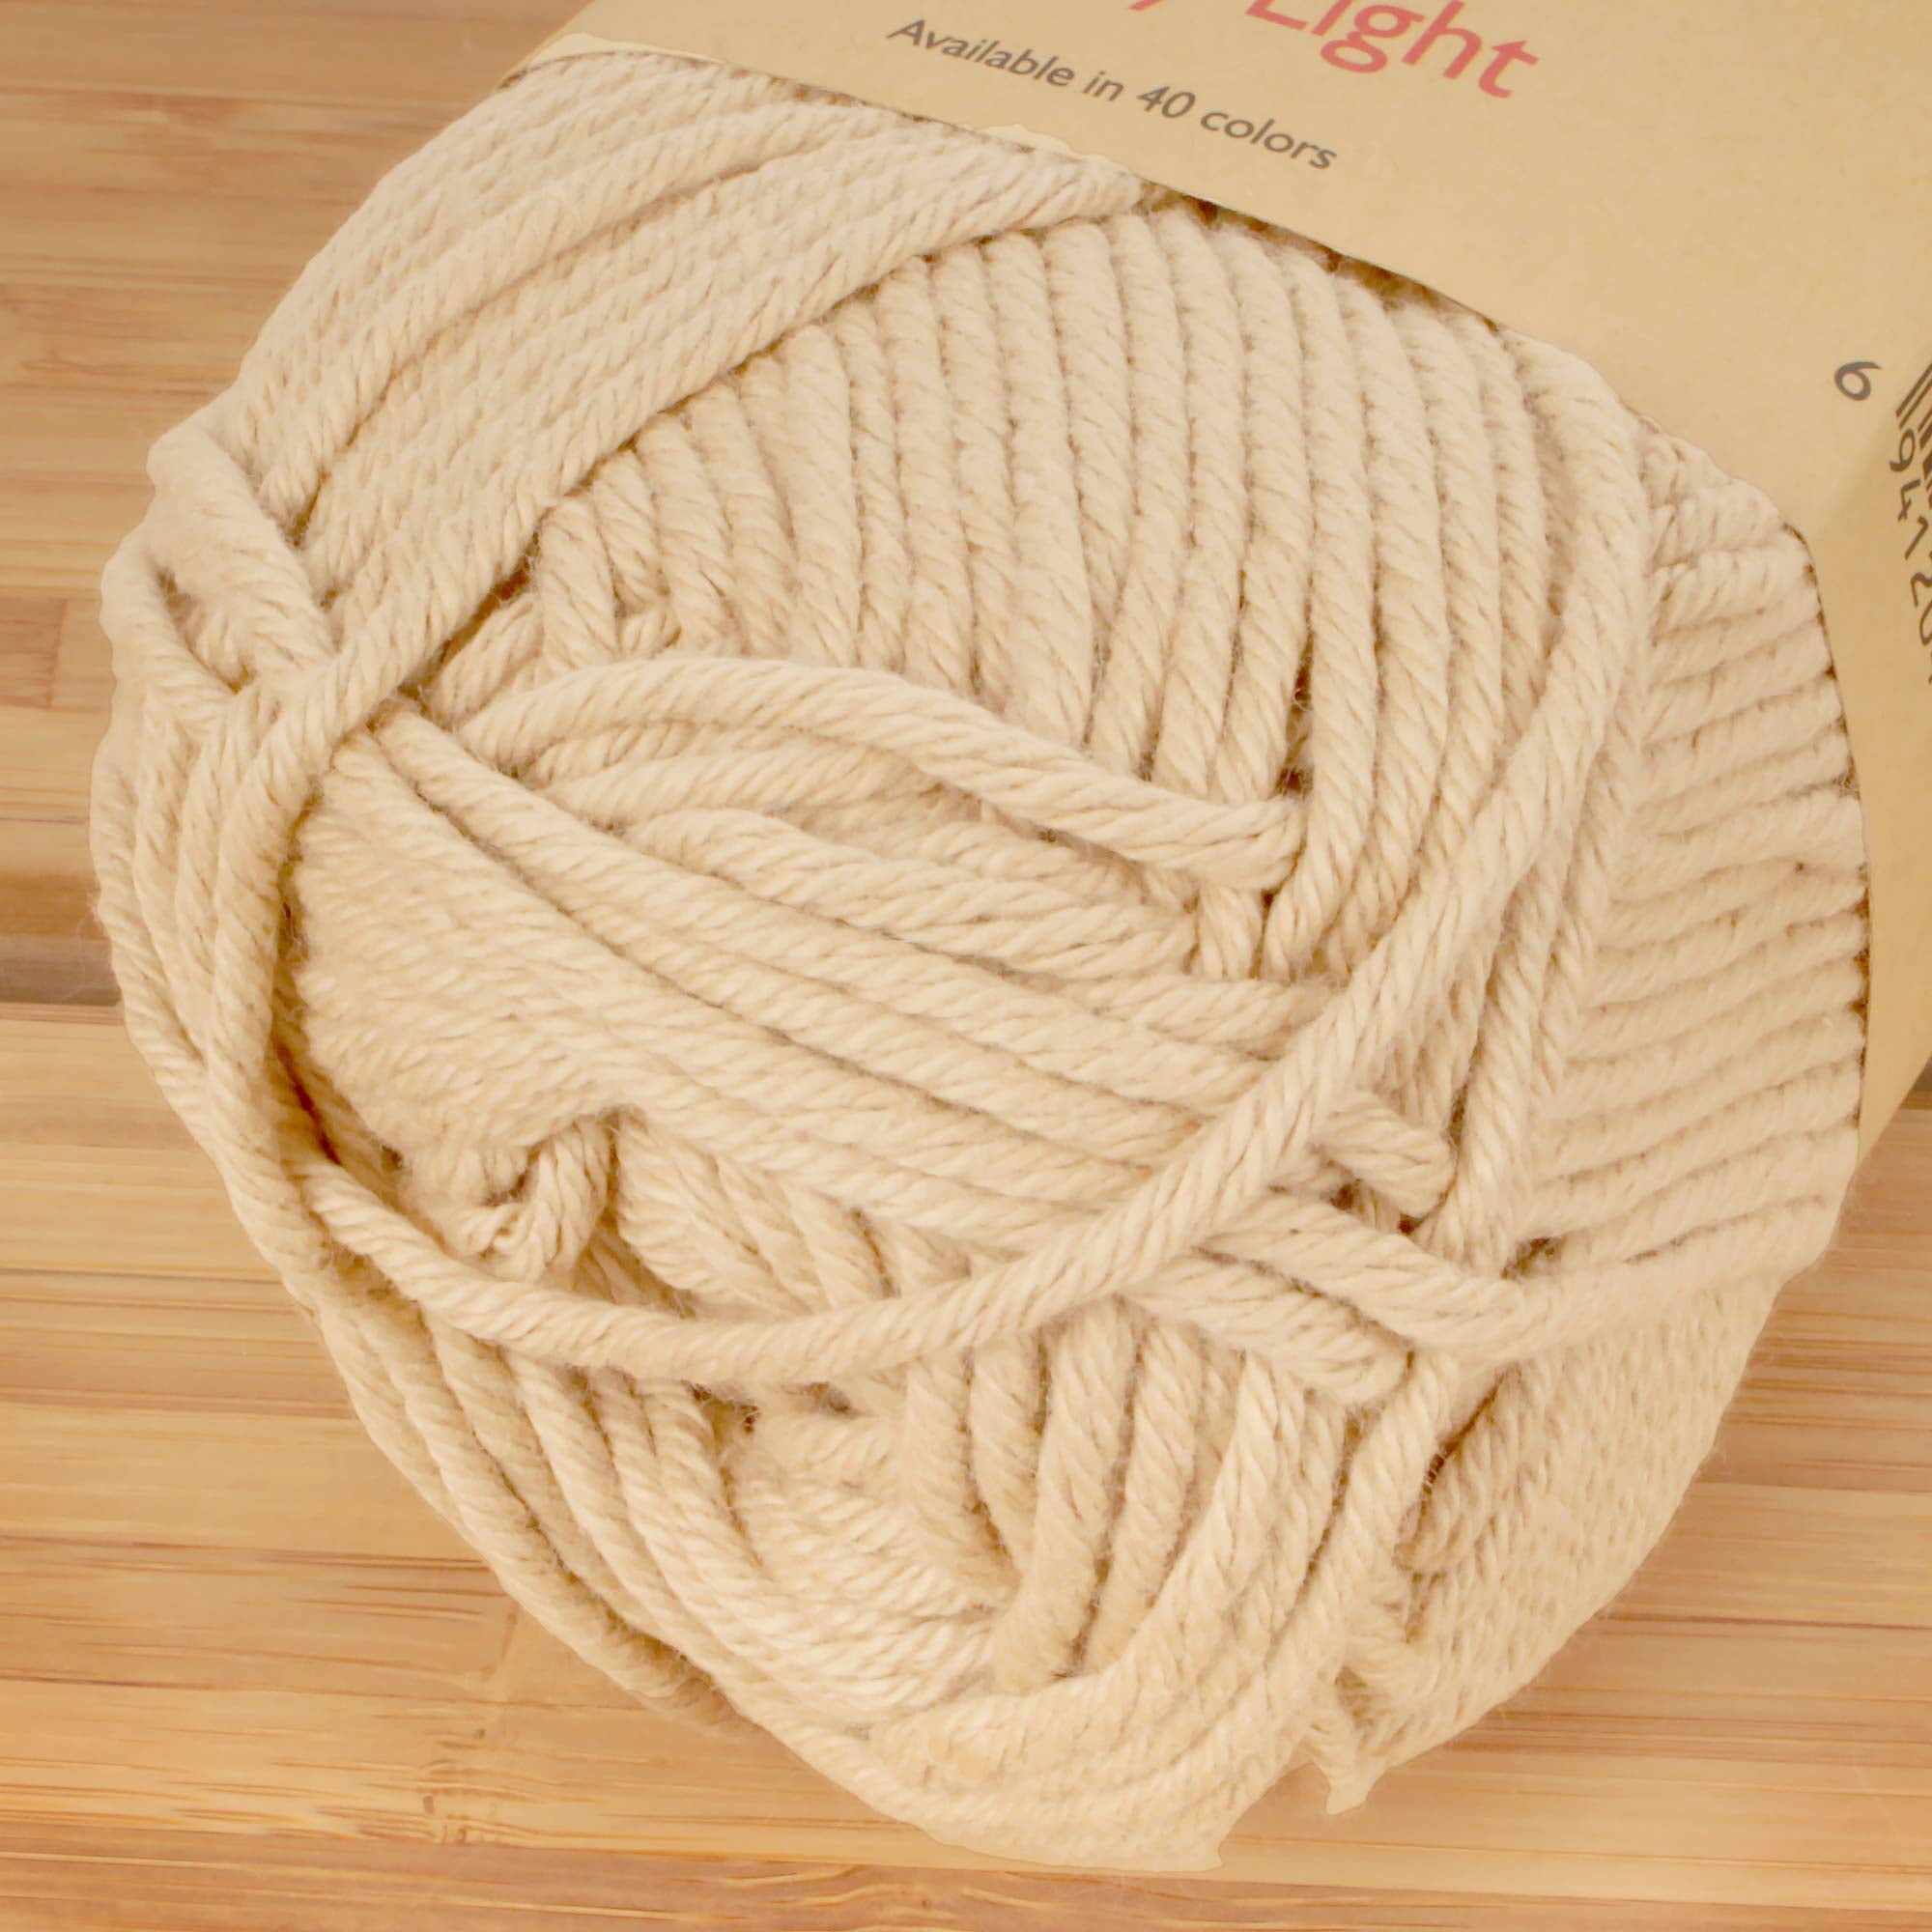 JubileeYarn Medium Gauge Worsted Weight Yarn - Dainty Light - 4 Skeins -  100% Cotton - Turkish Sea - Color 4053